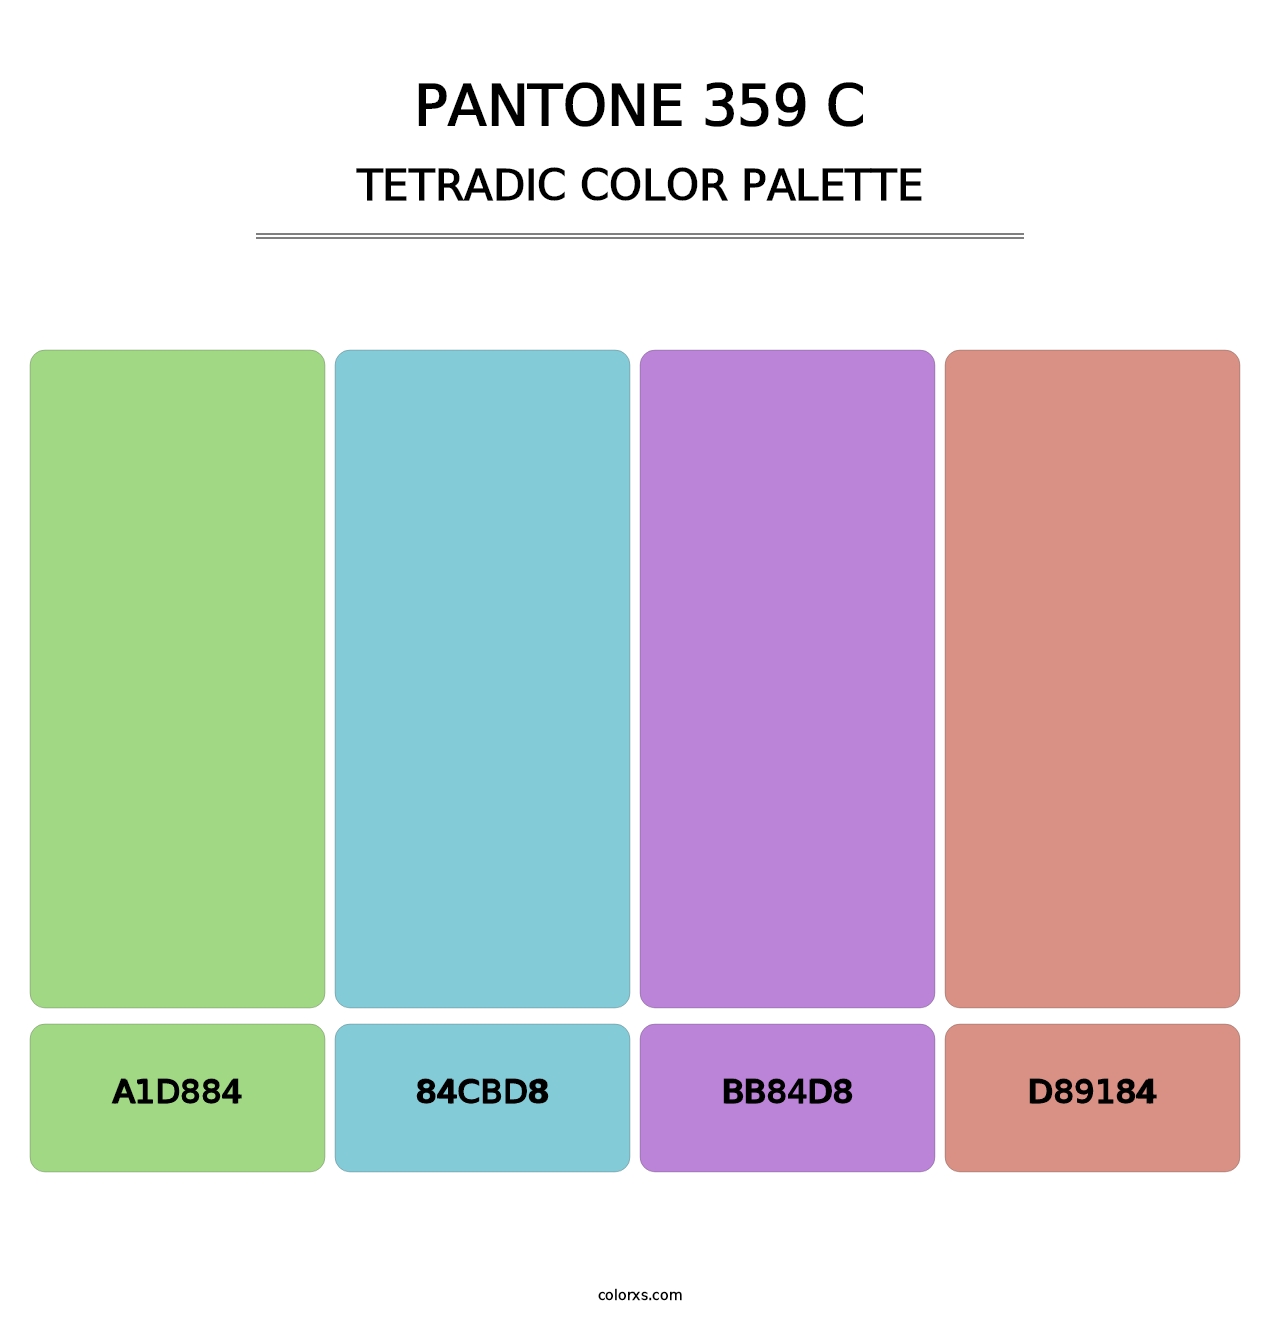 PANTONE 359 C - Tetradic Color Palette